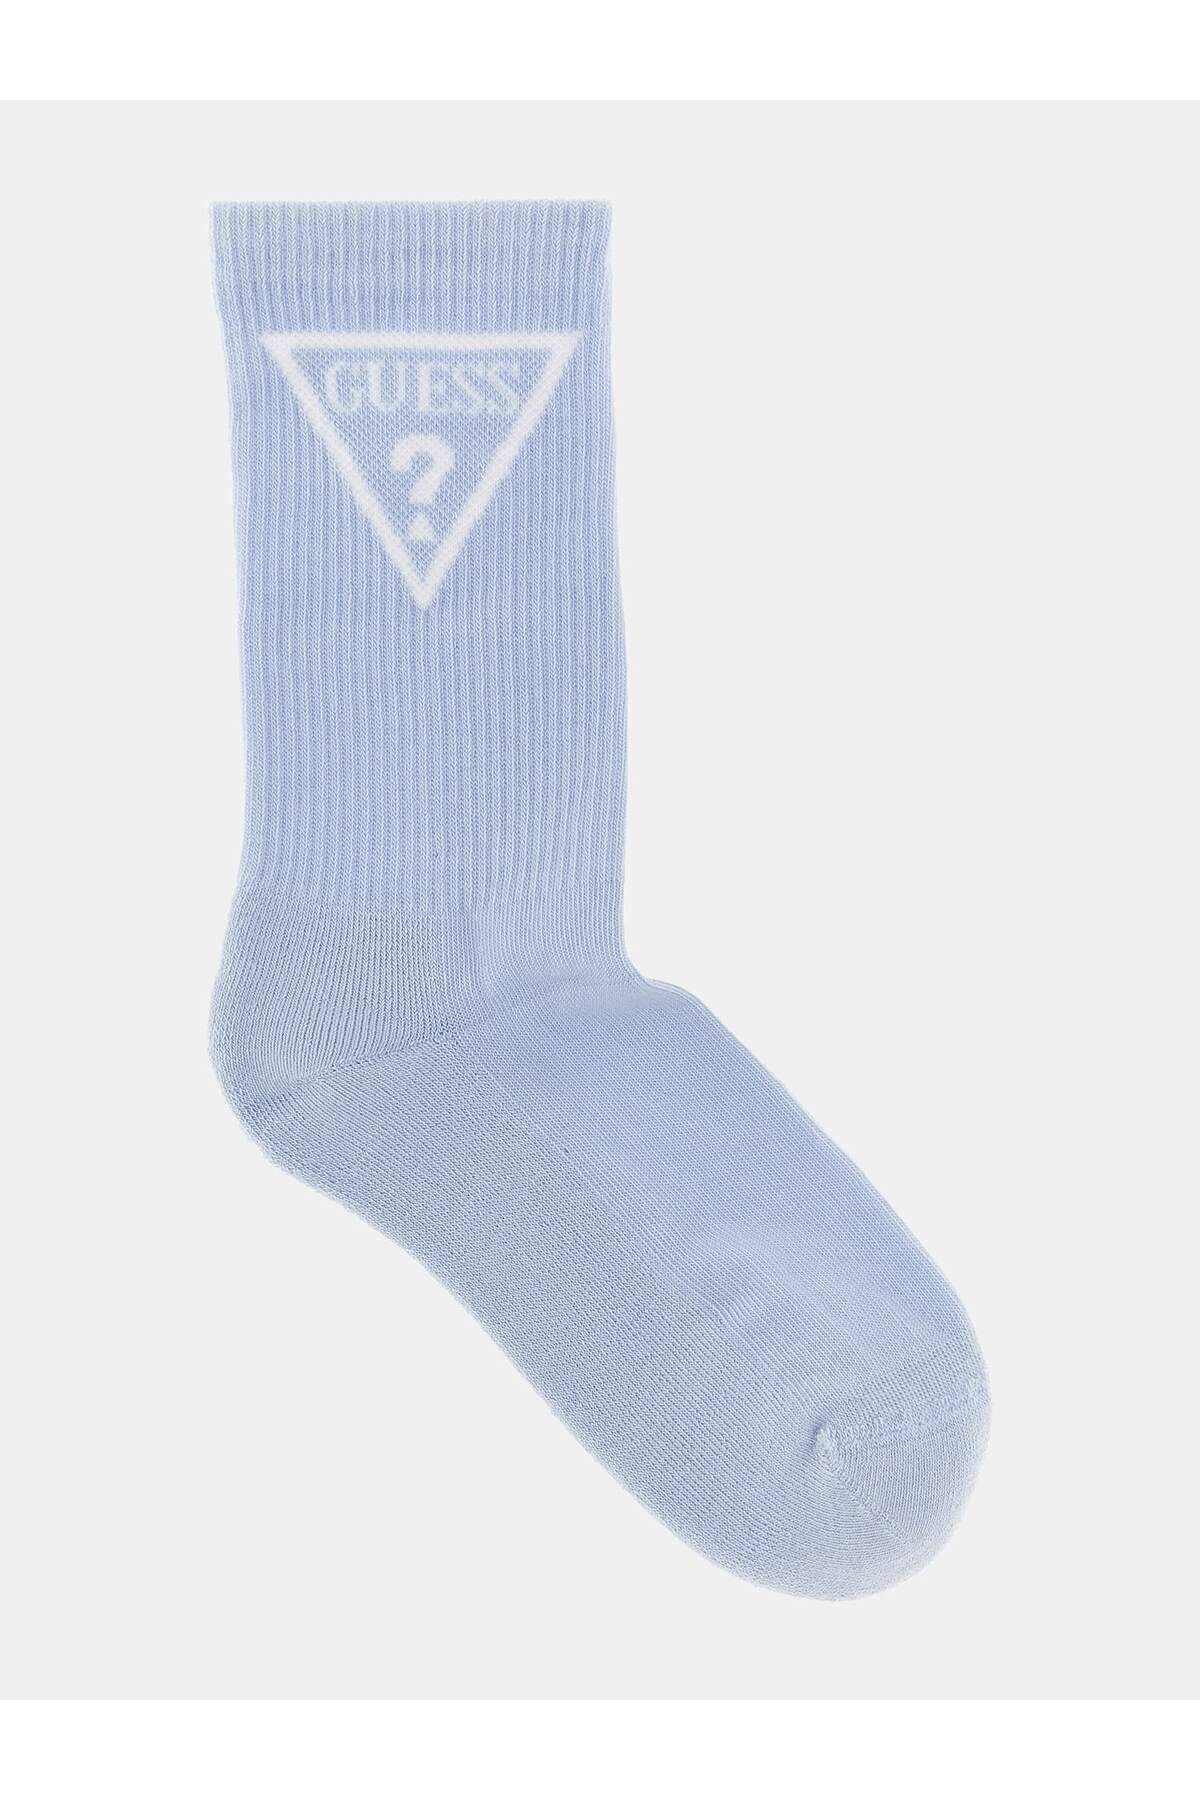 Guess Ellen Kadın Aktif Çorap